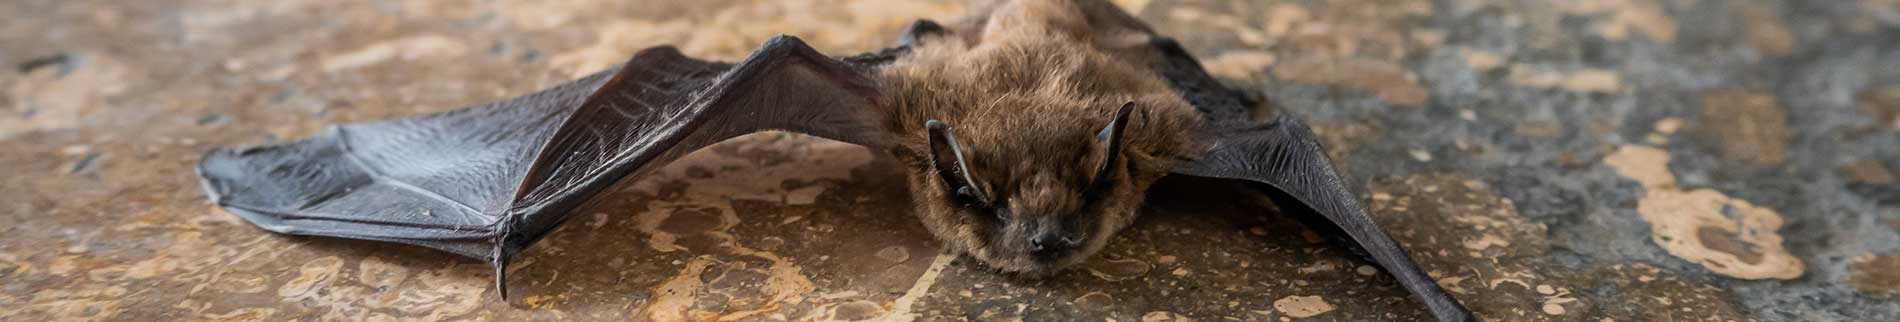 Wildlife Removal for Hopkinton, MA - bat removal